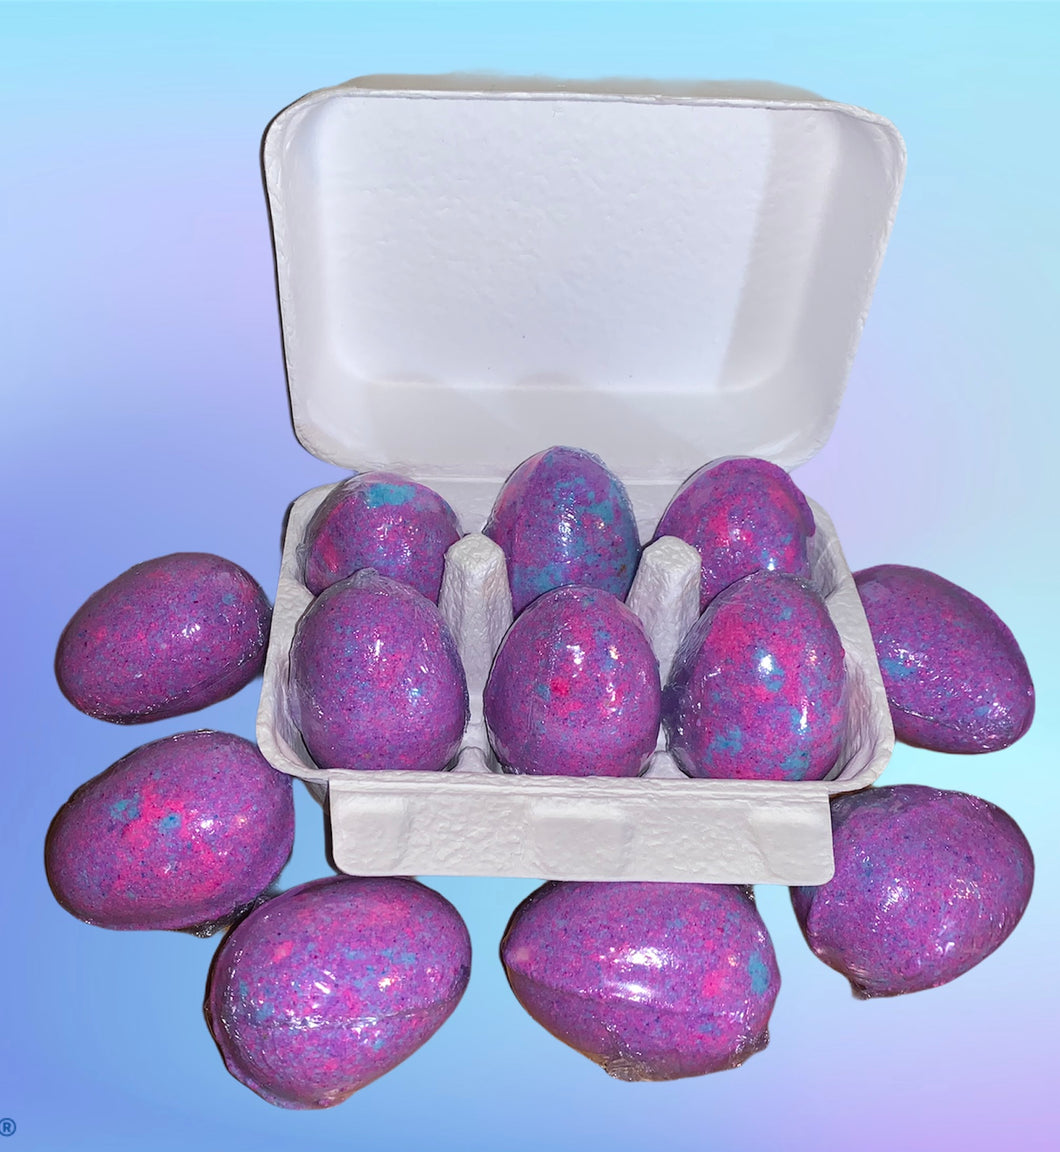 Limited Edition Multi Coloured Eggs